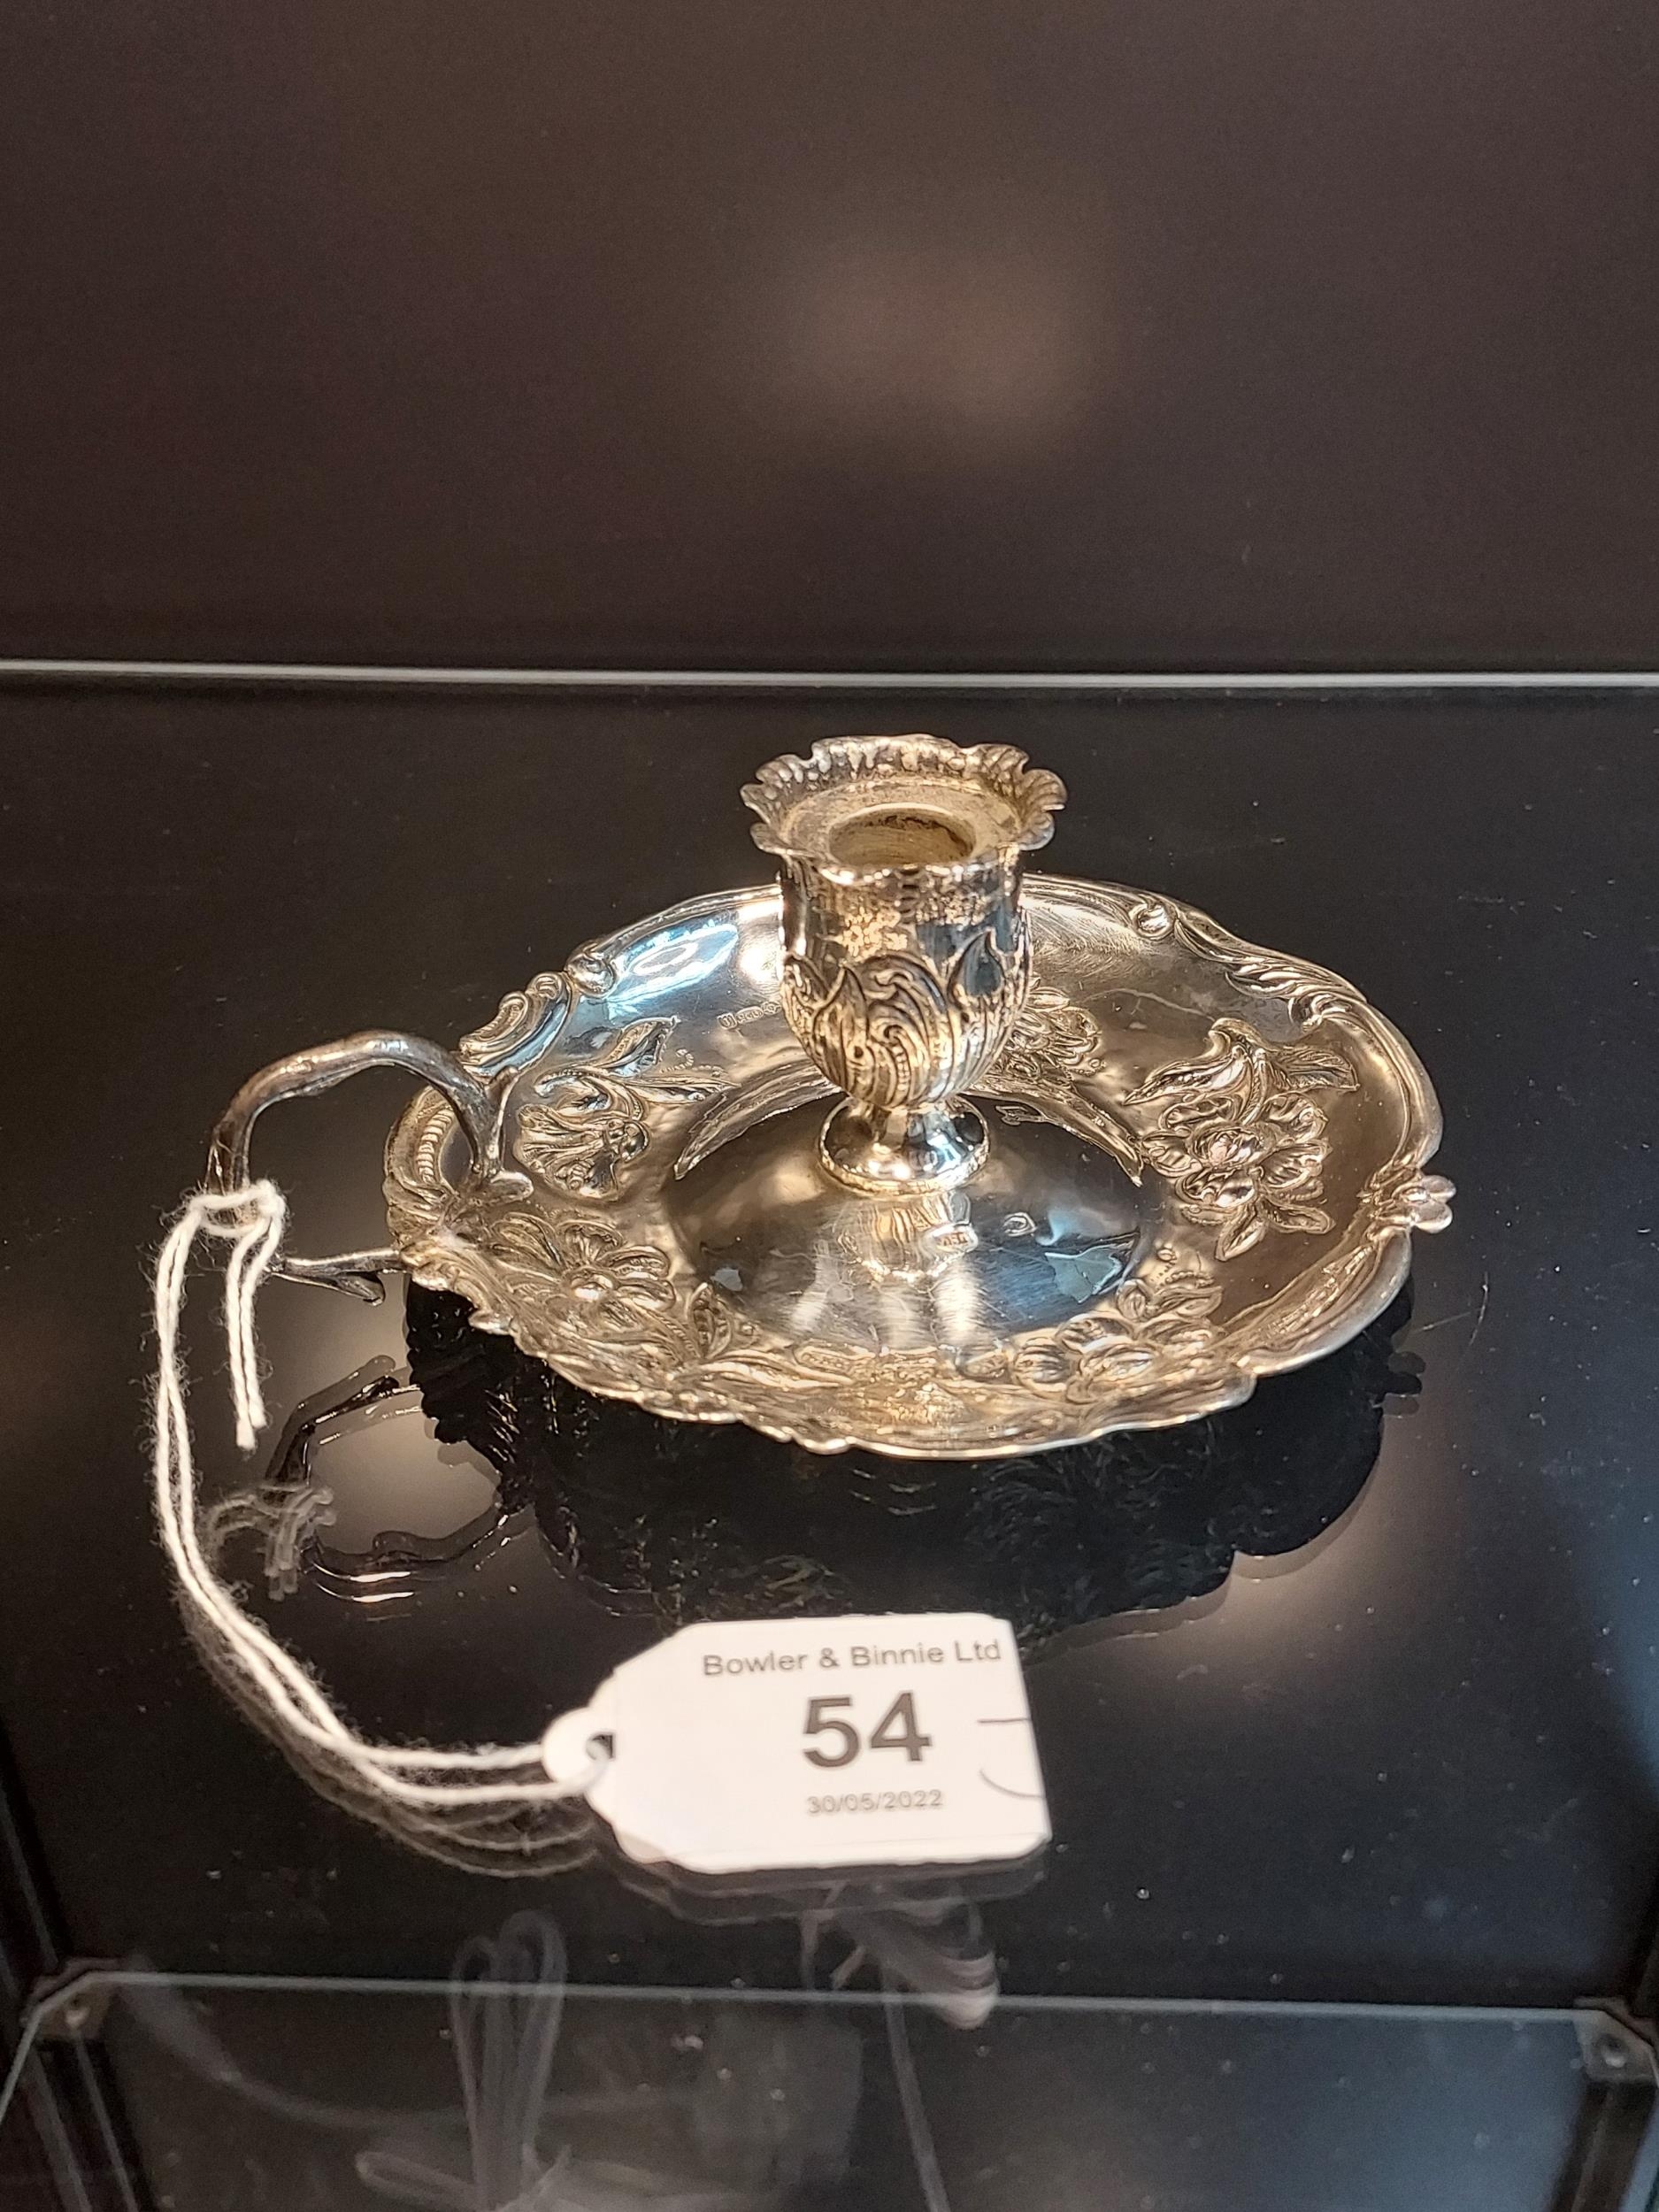 A London Import silver ornate candle holder. [79.51grams] [5cm high, 11cm diameter]